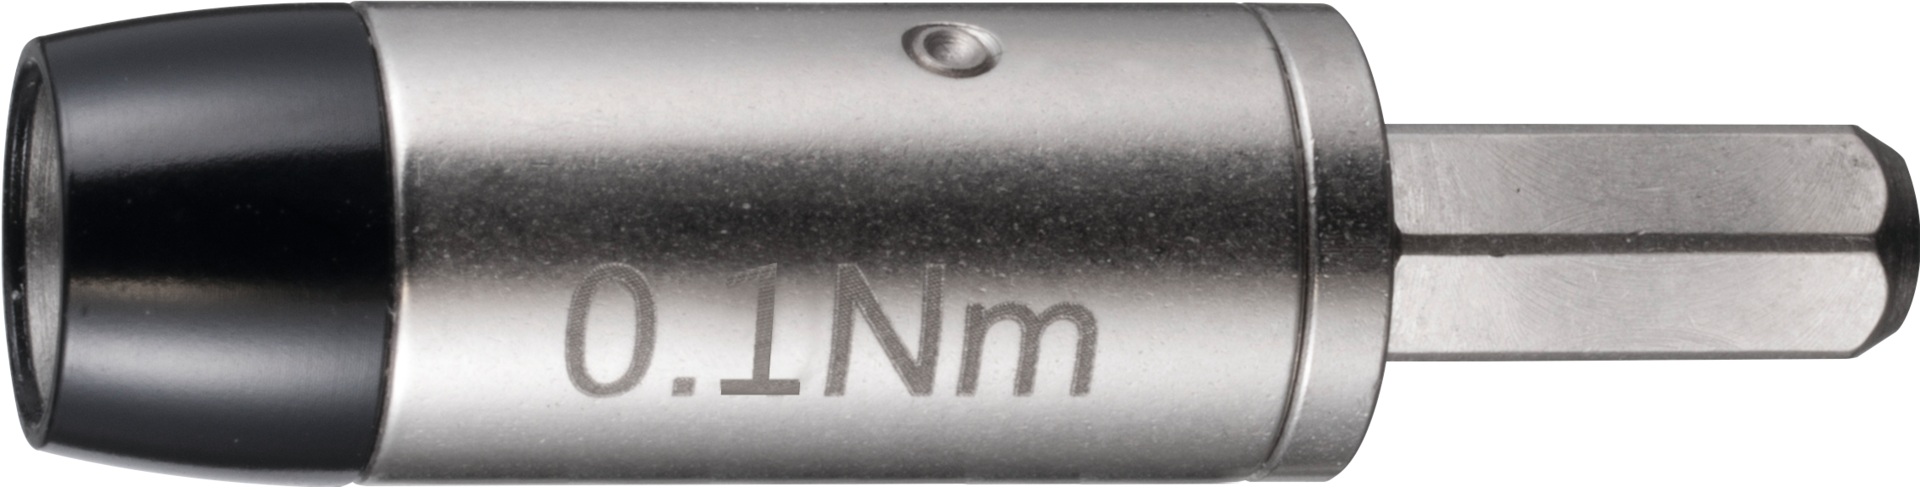 Drehmomentadapter Mini 0,1Nm +/-10%